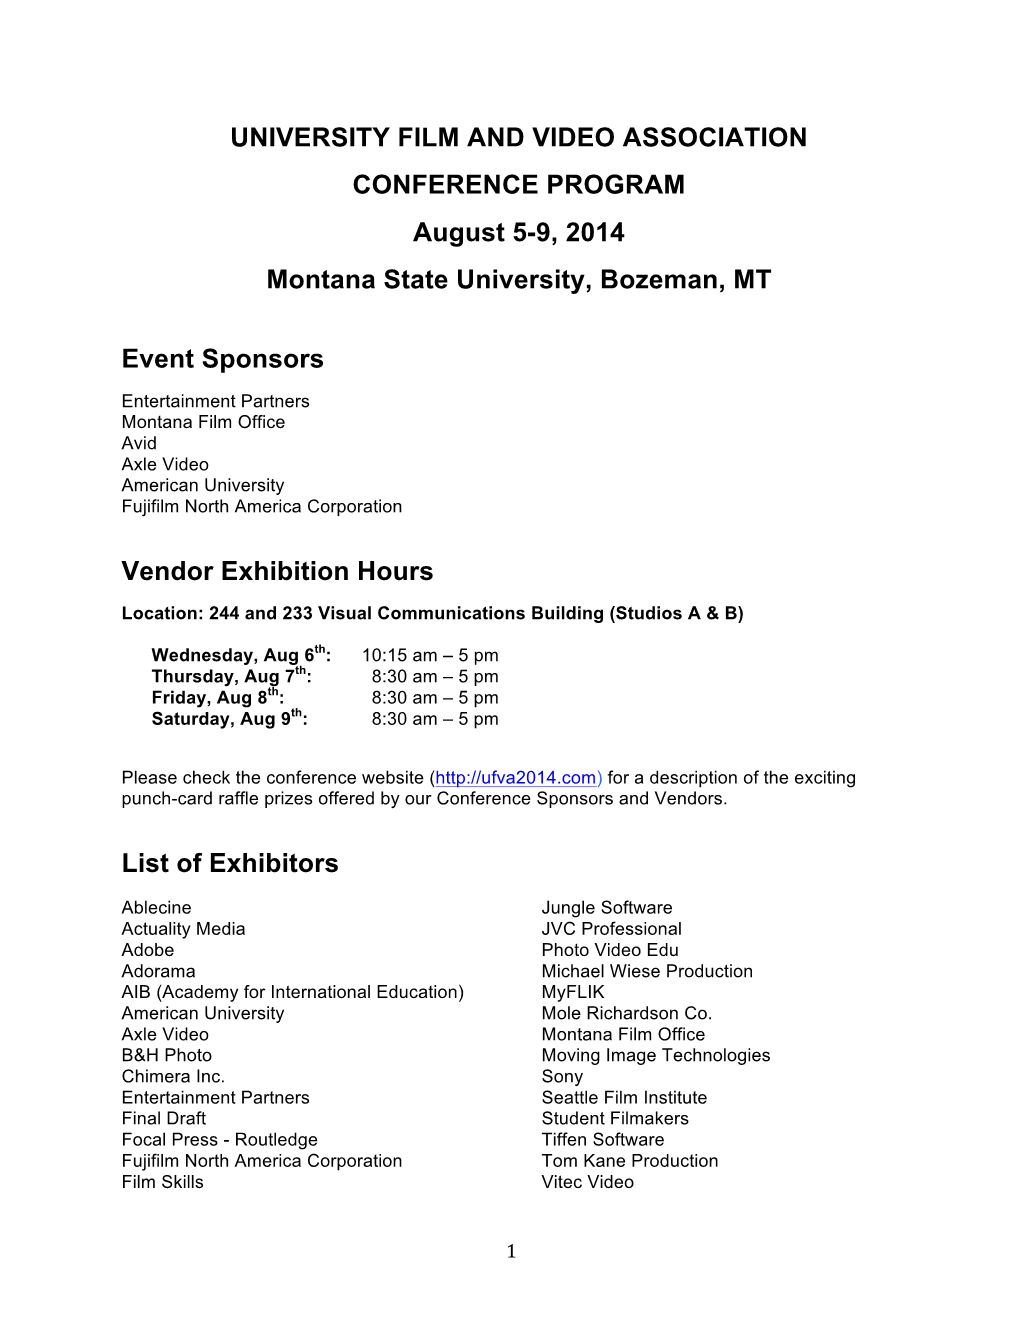 UFVA Final Conference Program